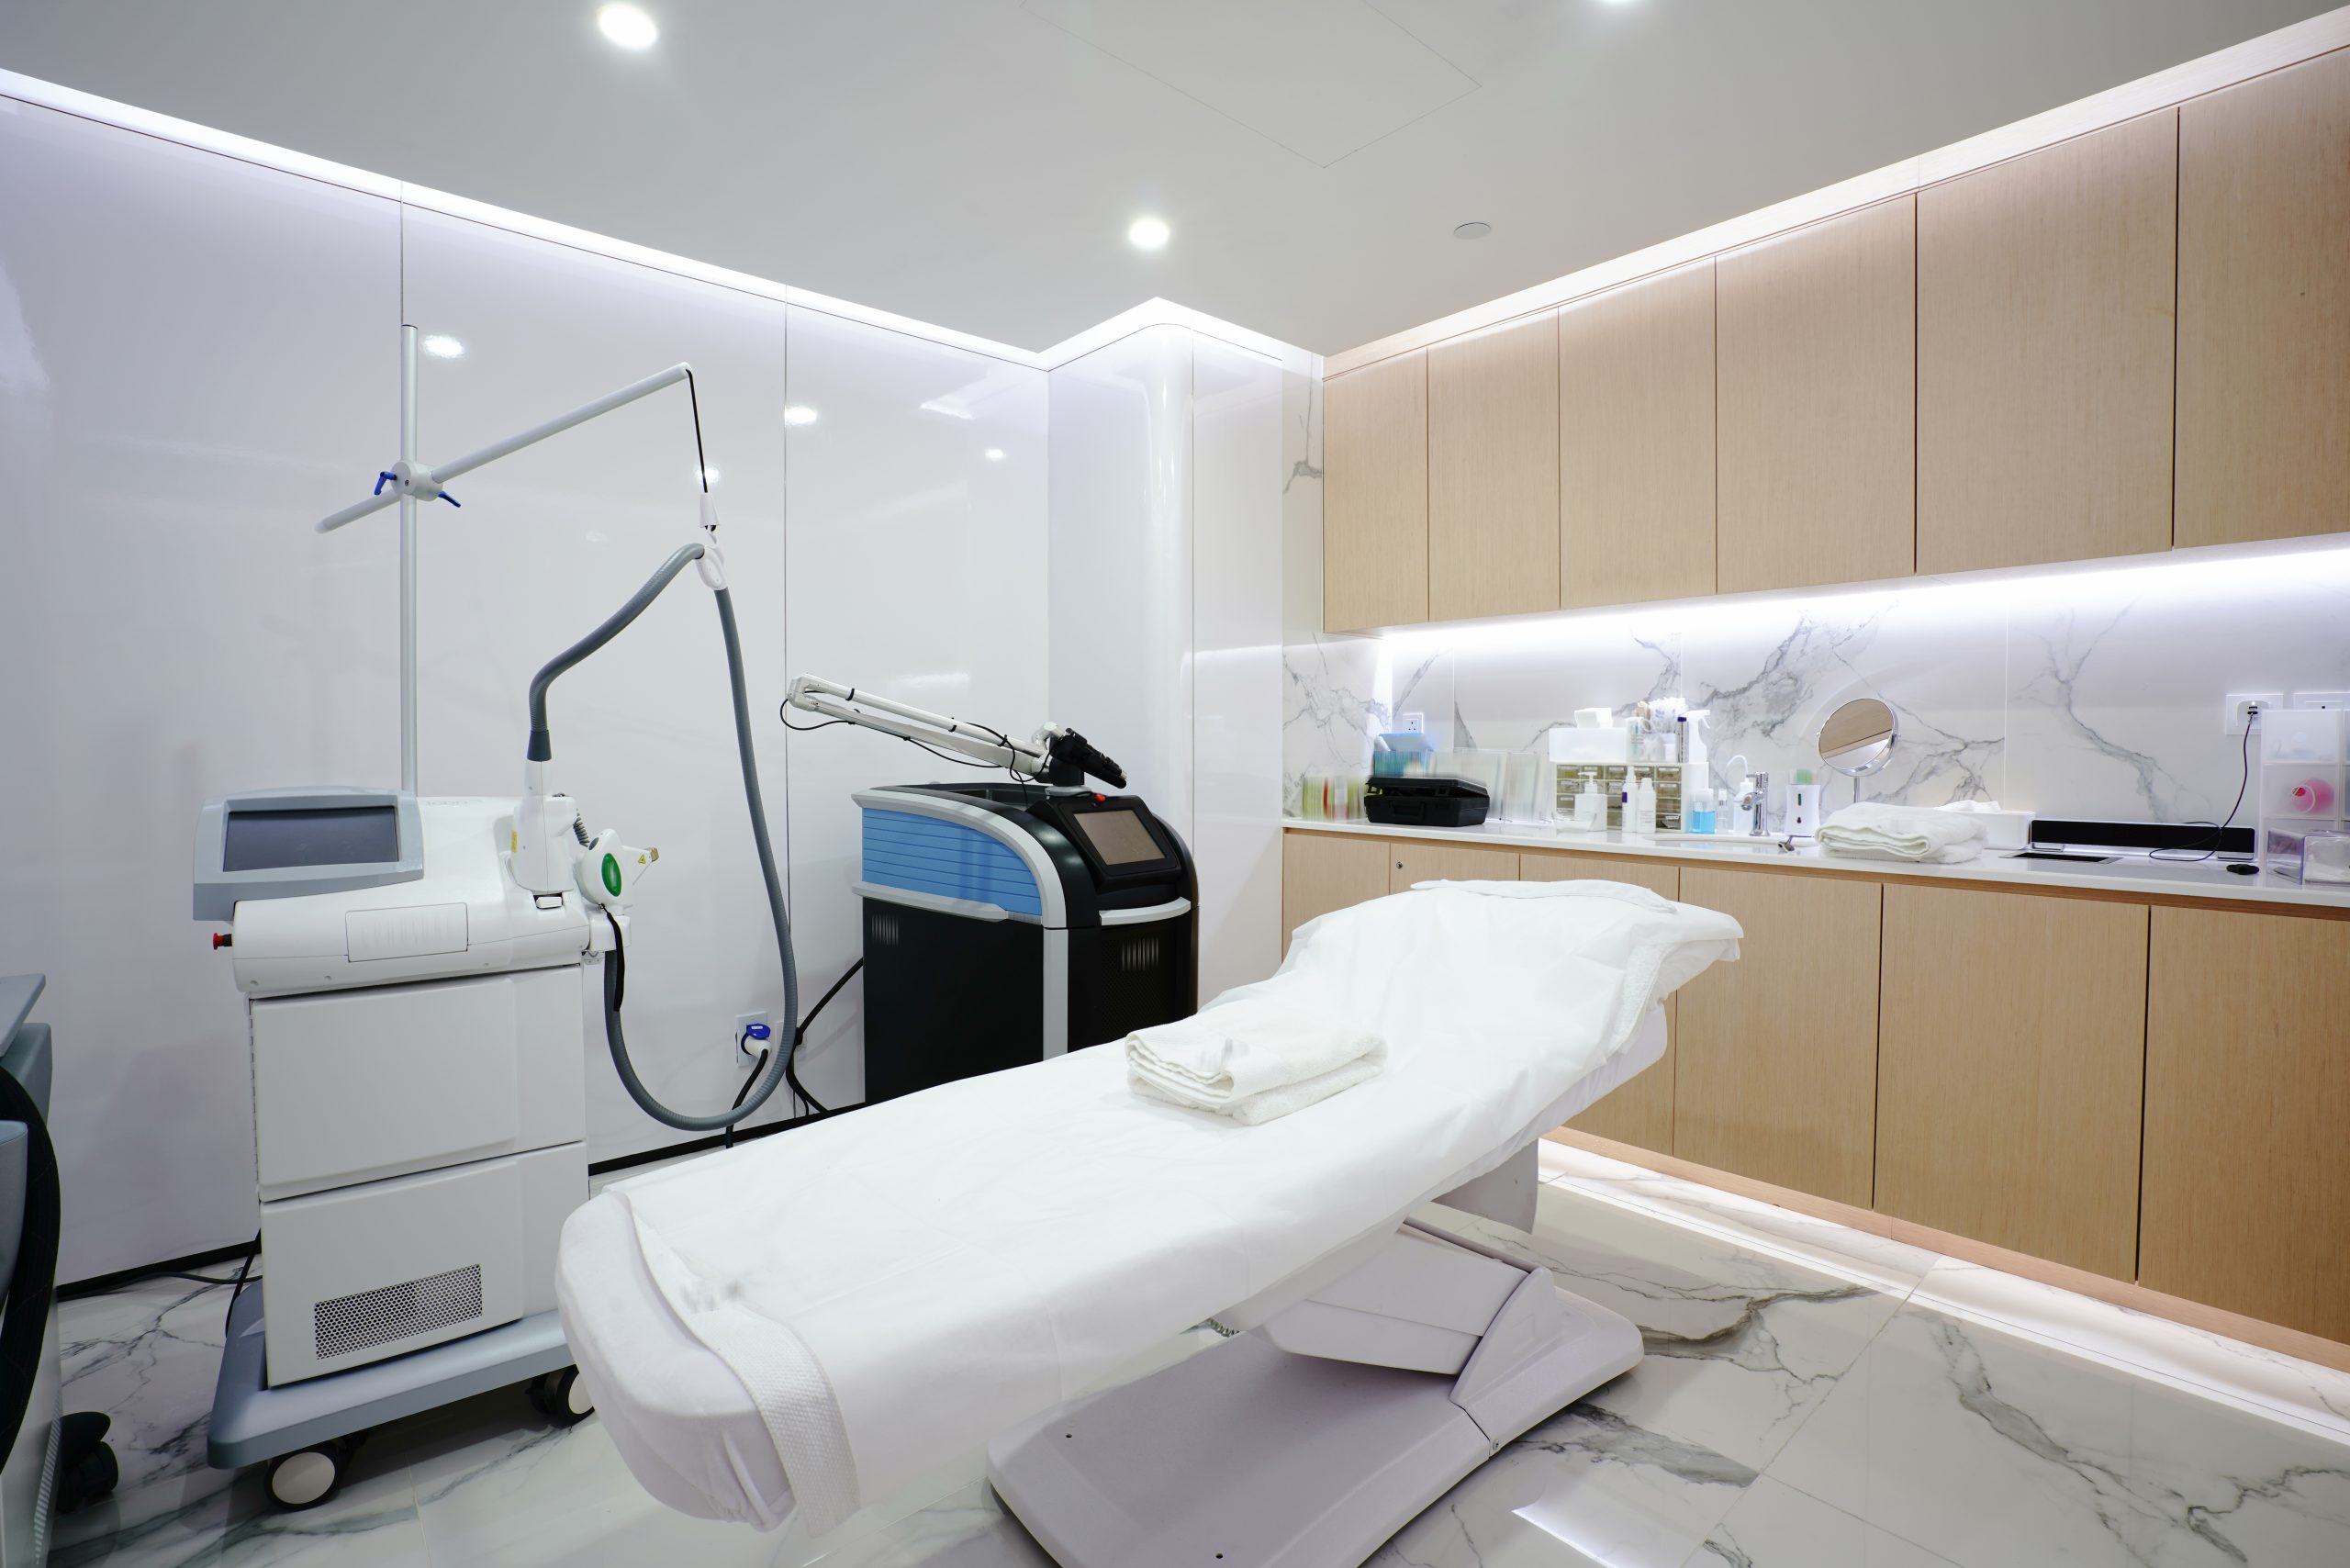 Minimalist Cosmetic Clinic Interior Design With Luxury Interior